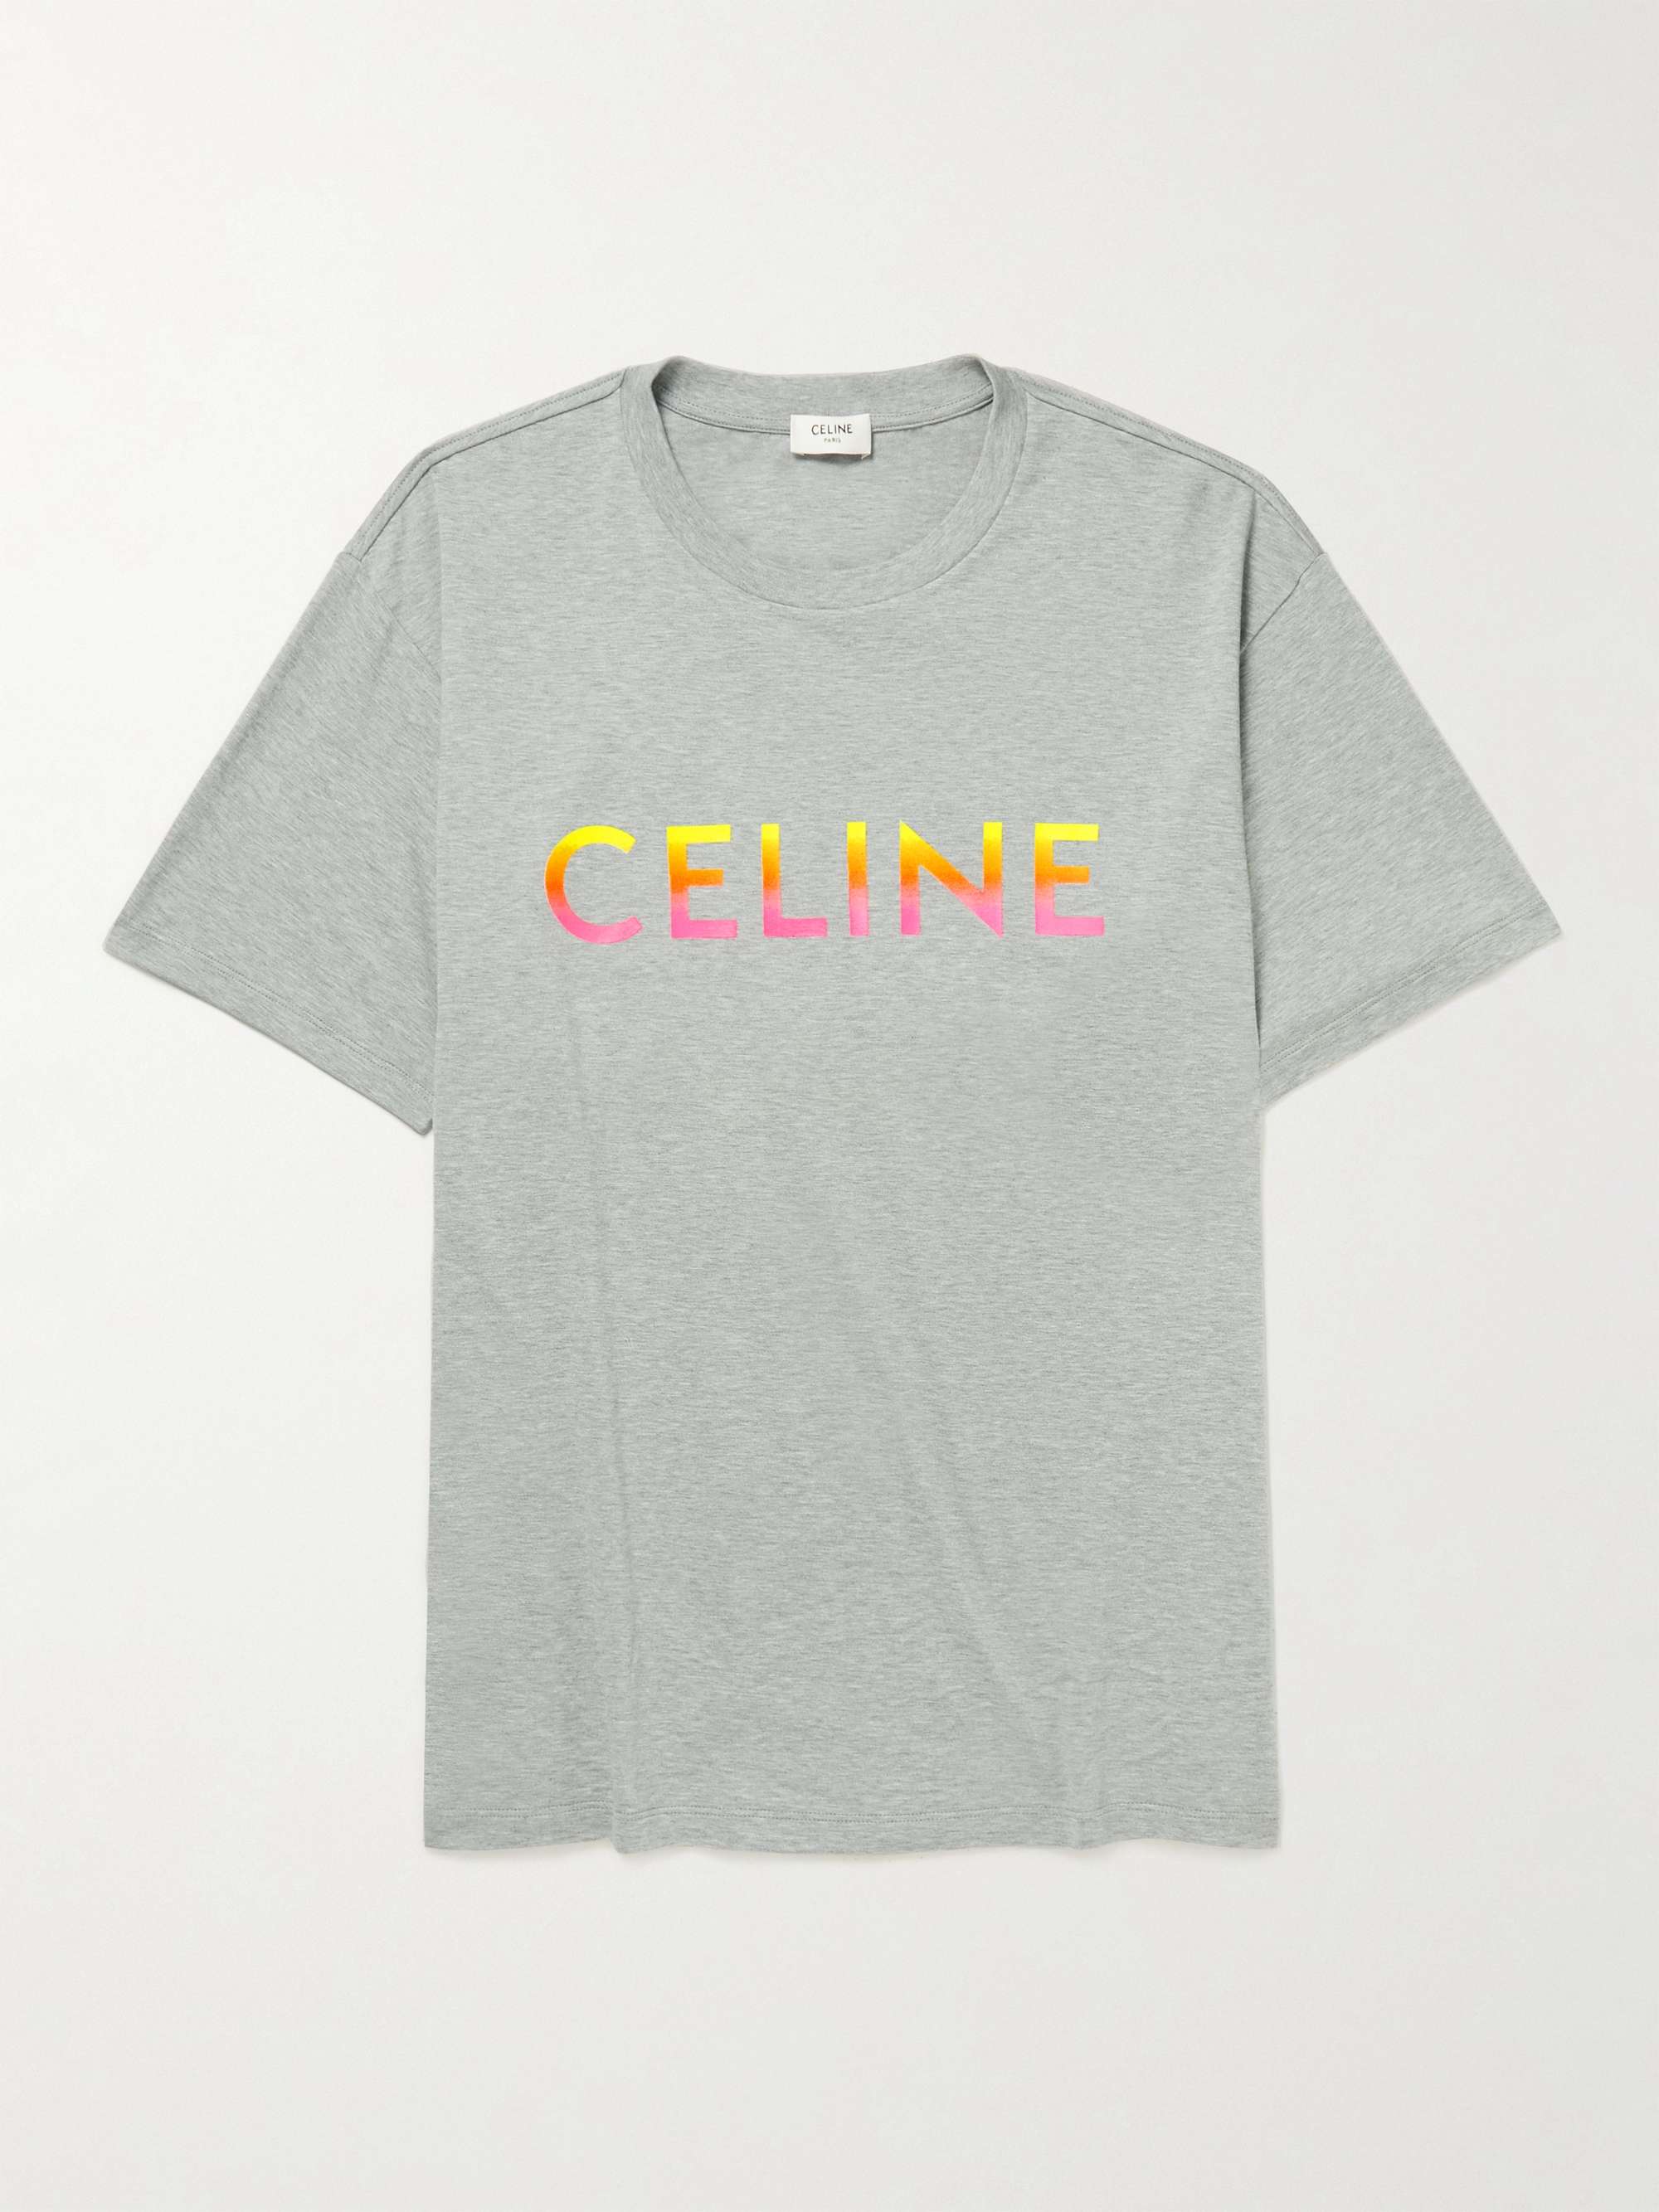 CELINE HOMME Oversized Logo-Print Cotton-Jersey T-Shirt | MR PORTER